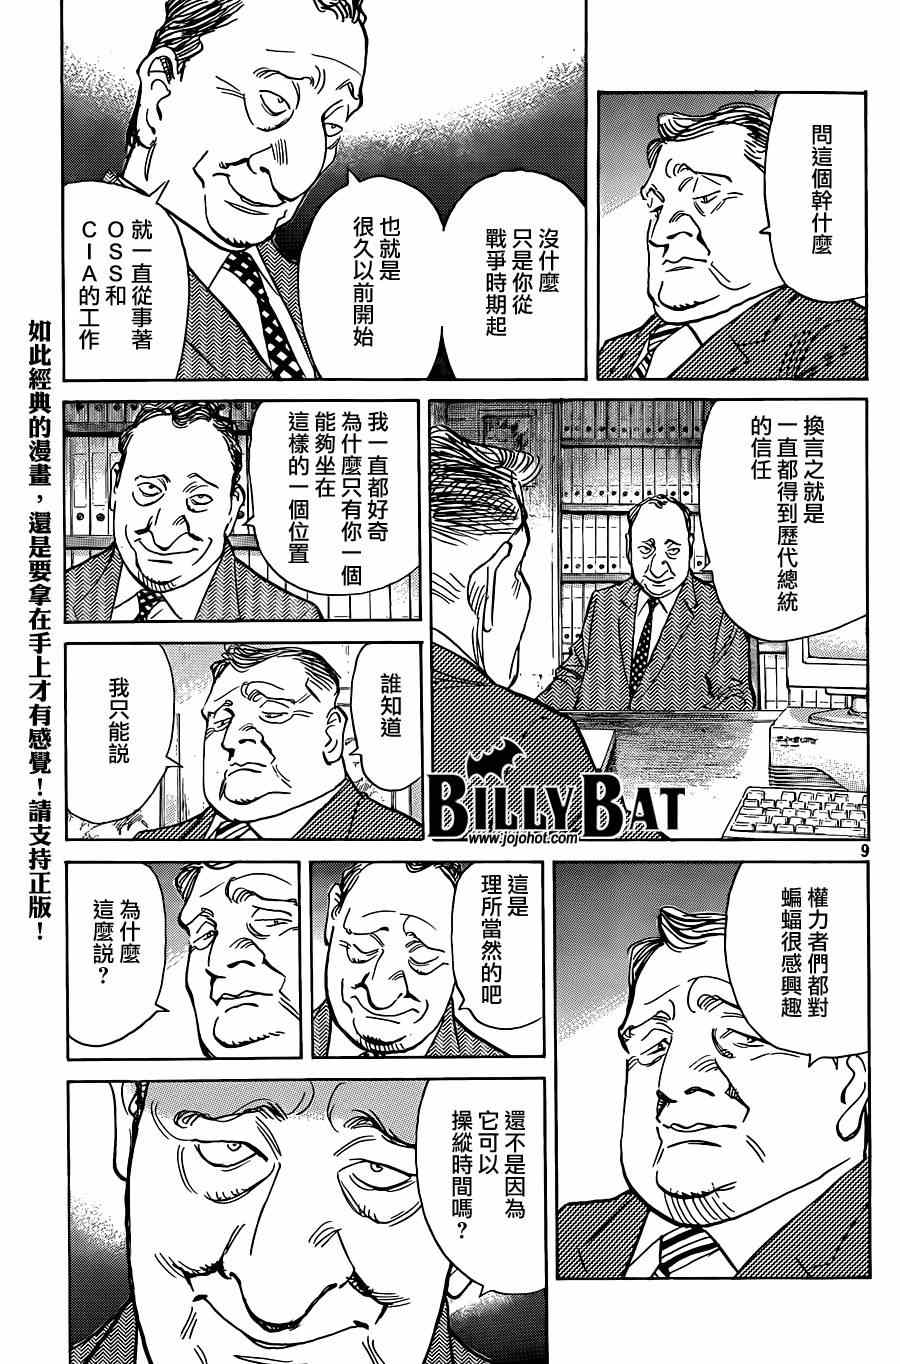 《BILLY BAT》漫画 蝙蝠比利 125集